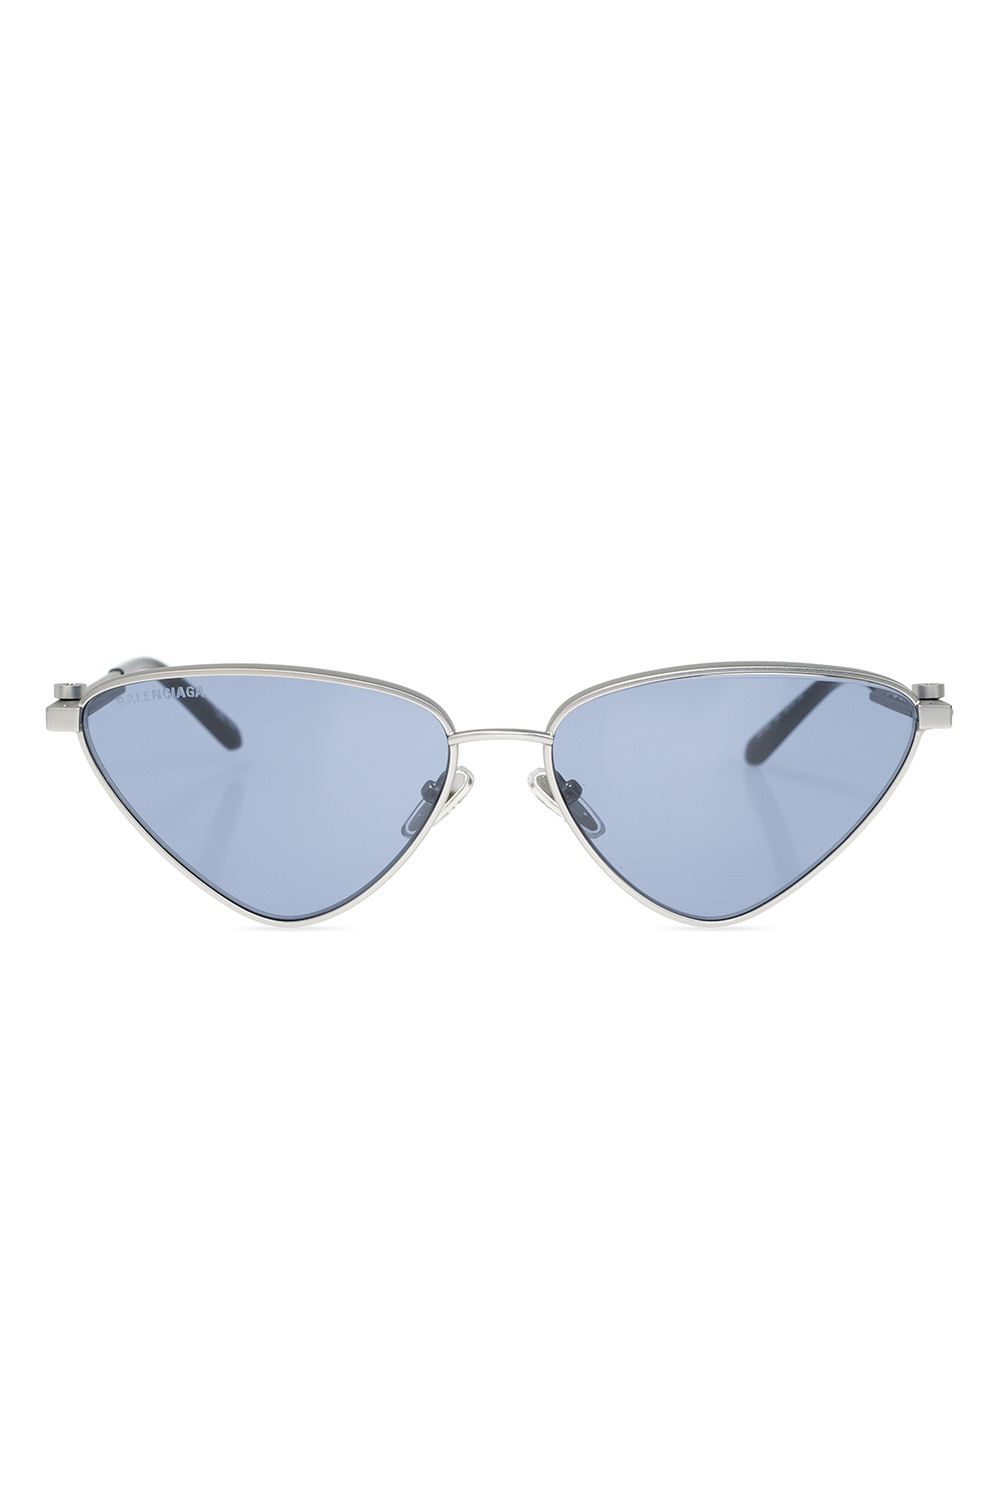 IetpShops SA - Silver Sunglasses Balenciaga - MANCHESTER